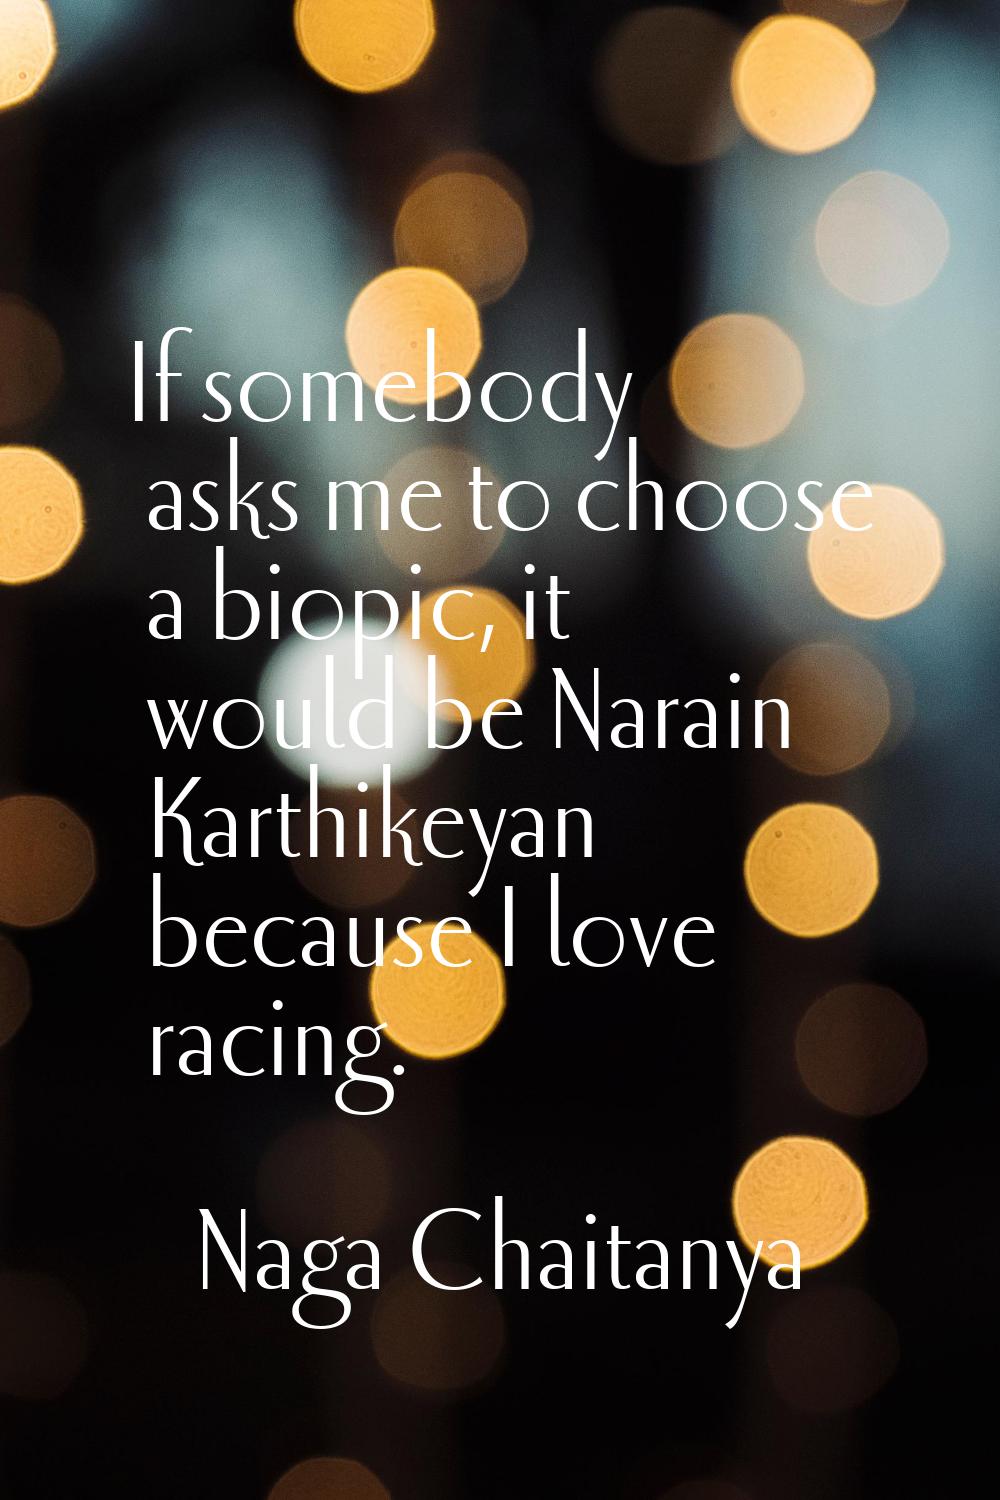 If somebody asks me to choose a biopic, it would be Narain Karthikeyan because I love racing.